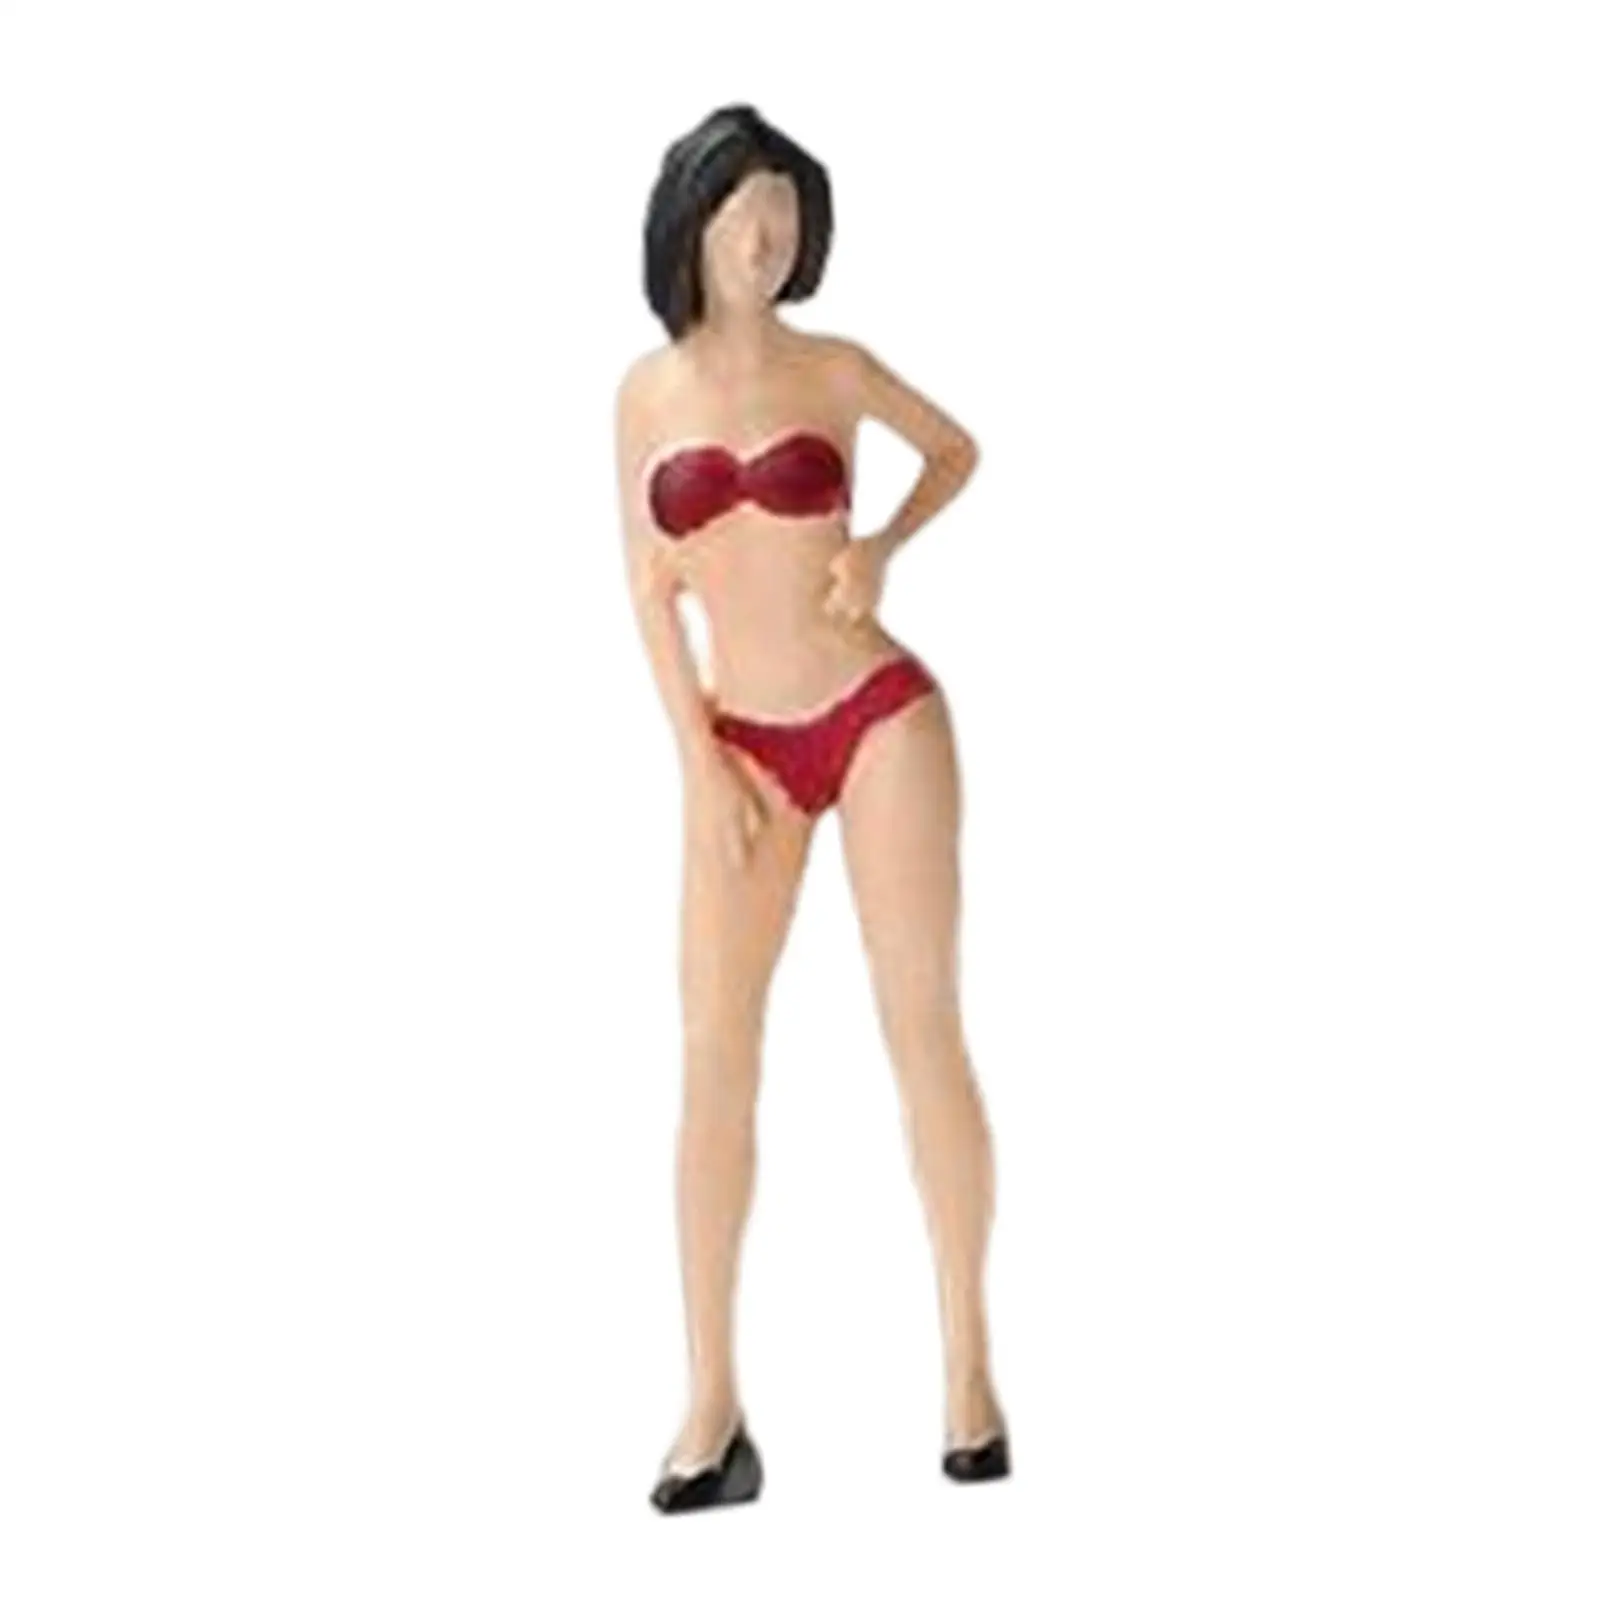 1/64 Scale People Model Role Play Figure Resin girl People Figurine for Miniature Scene Desktop Decoration Train Layout